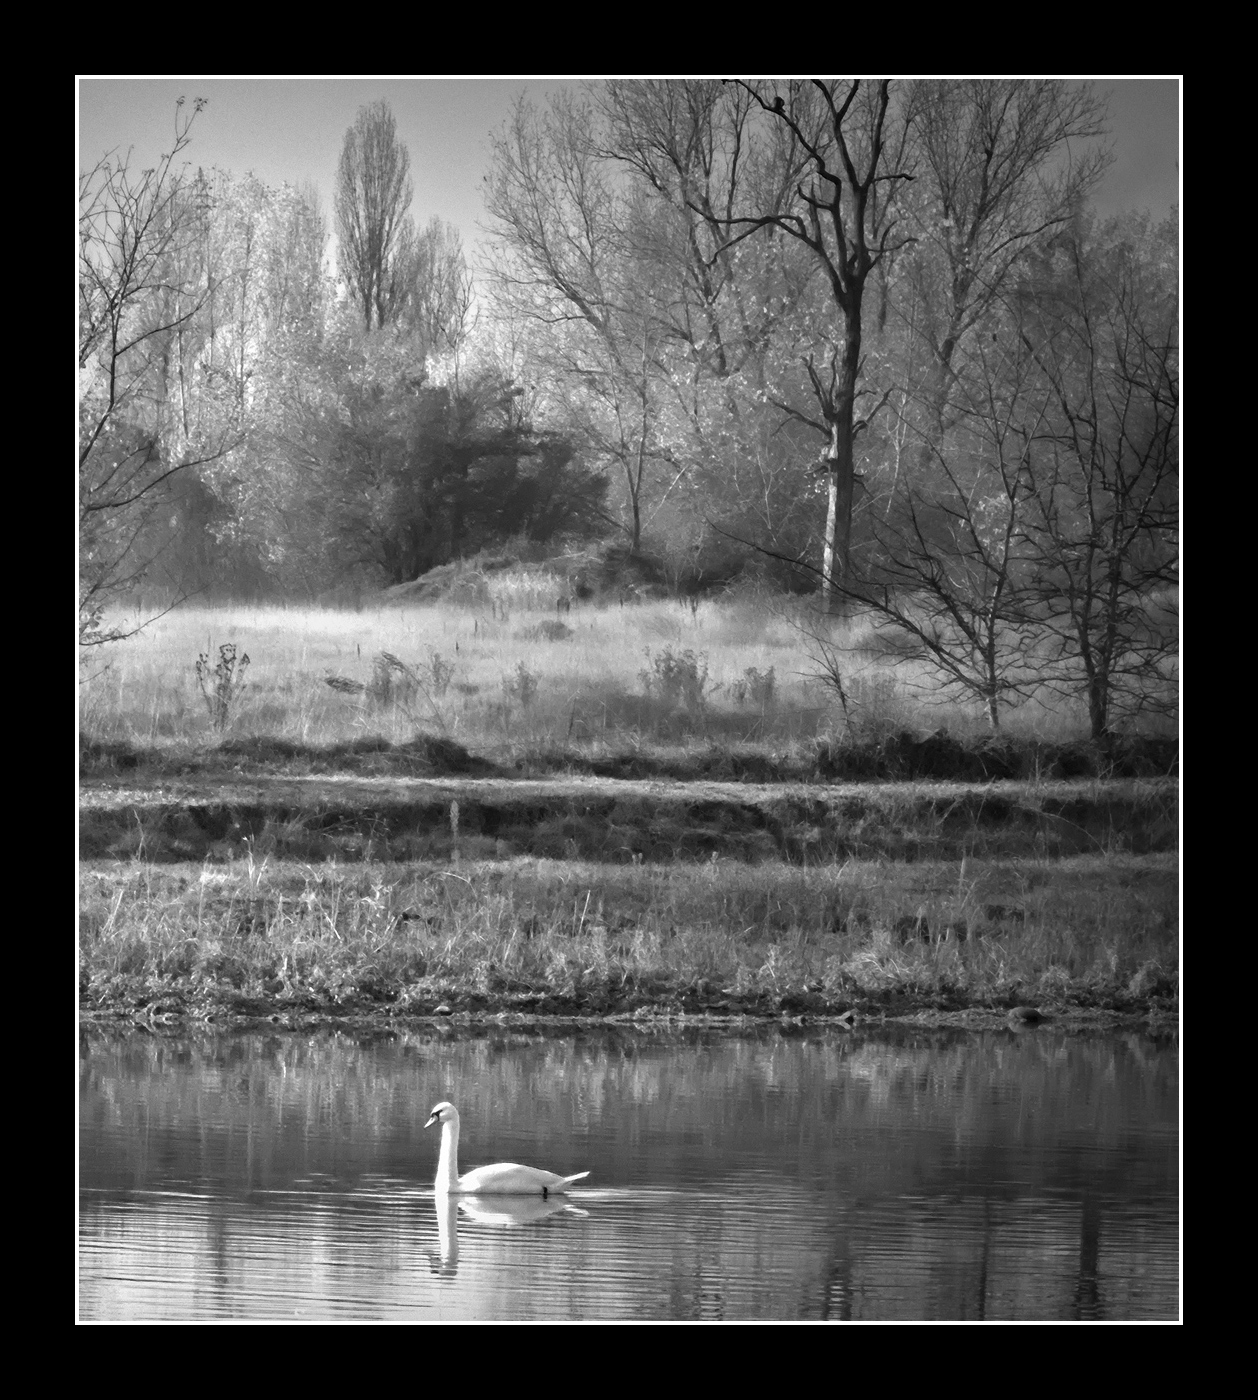 The Swan...